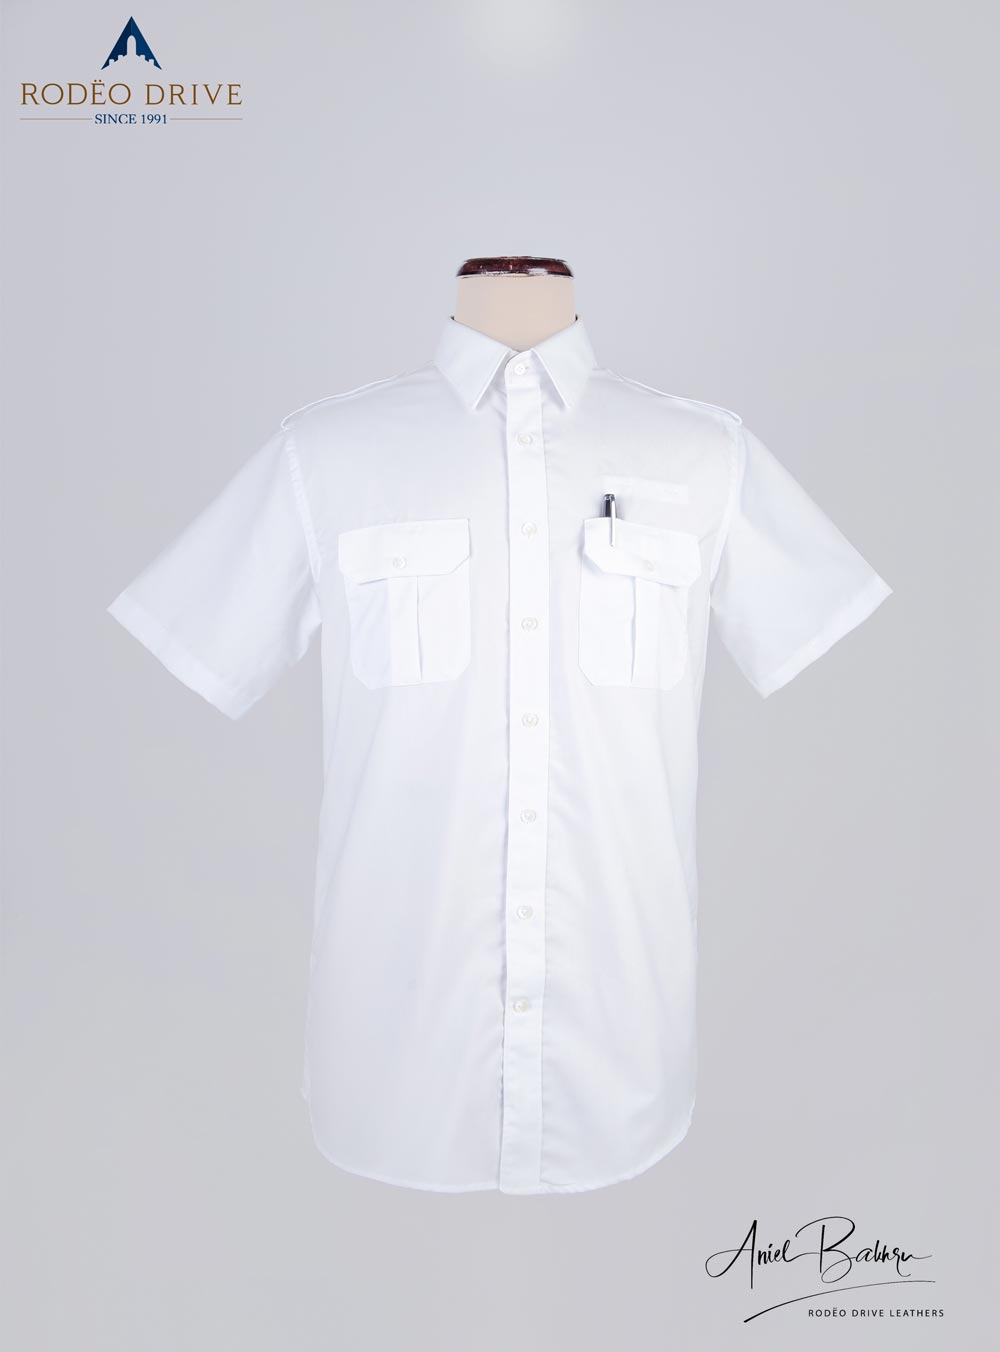 Display image for Men's All airline standard pilot shirt